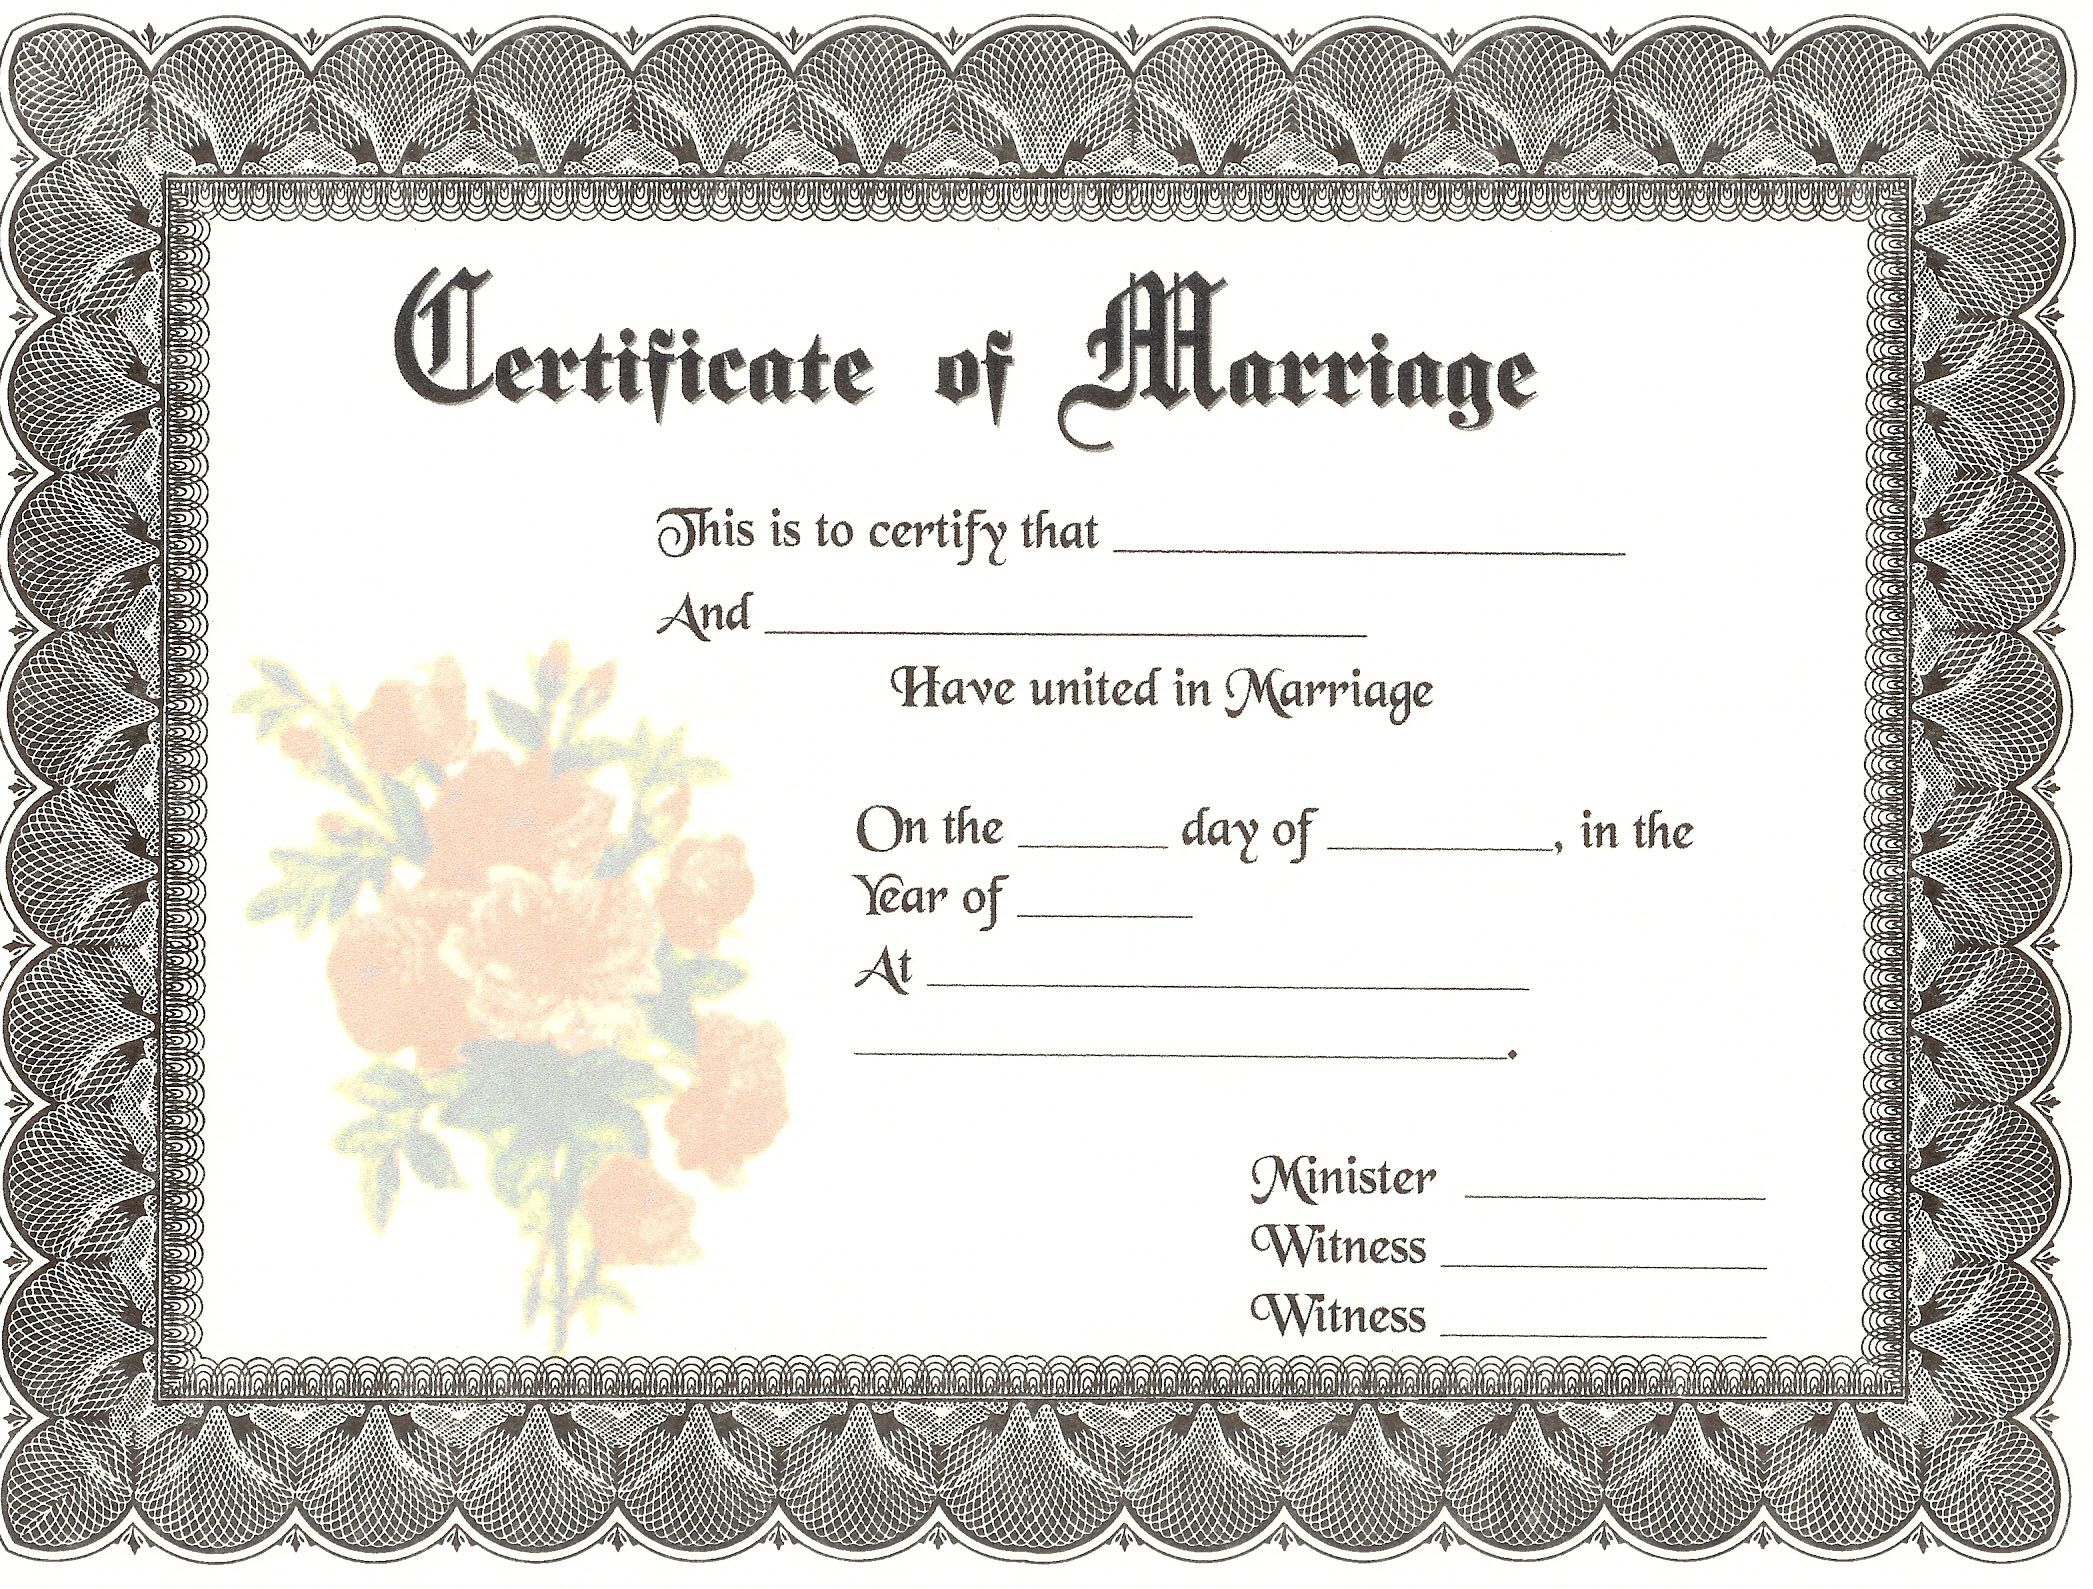 marriage certificate Blank Template - Imgflip Pertaining To Certificate Of Marriage Template